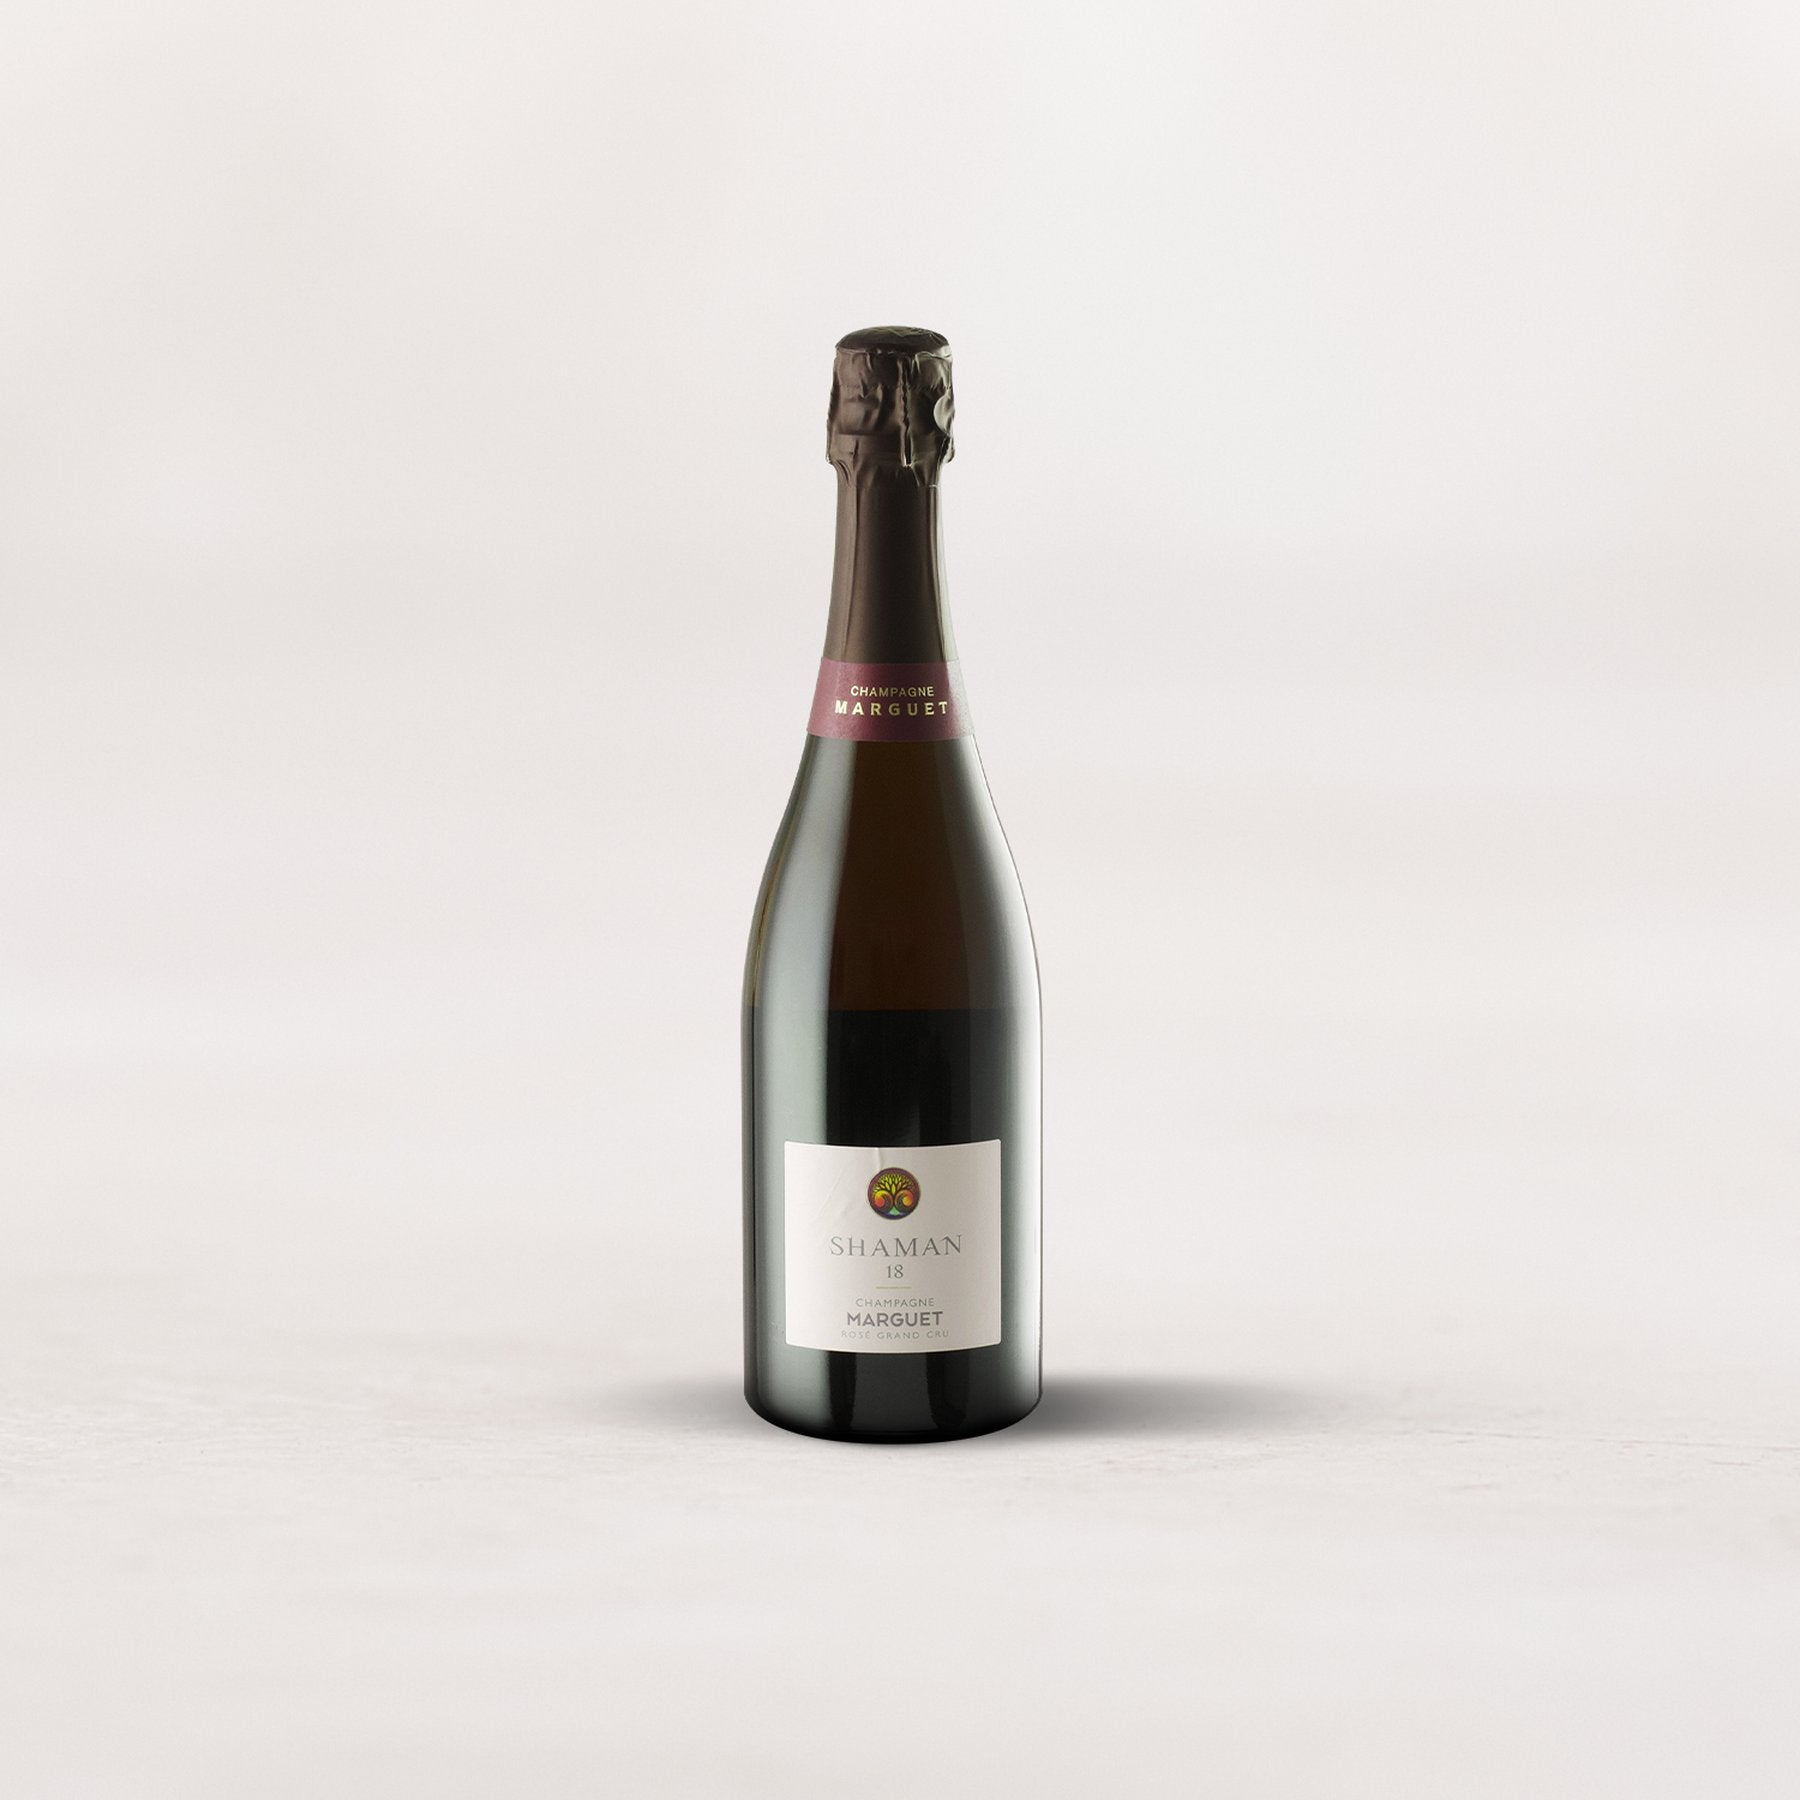 Champagne Marguet, “Shaman 18” Grand Cru Rosé